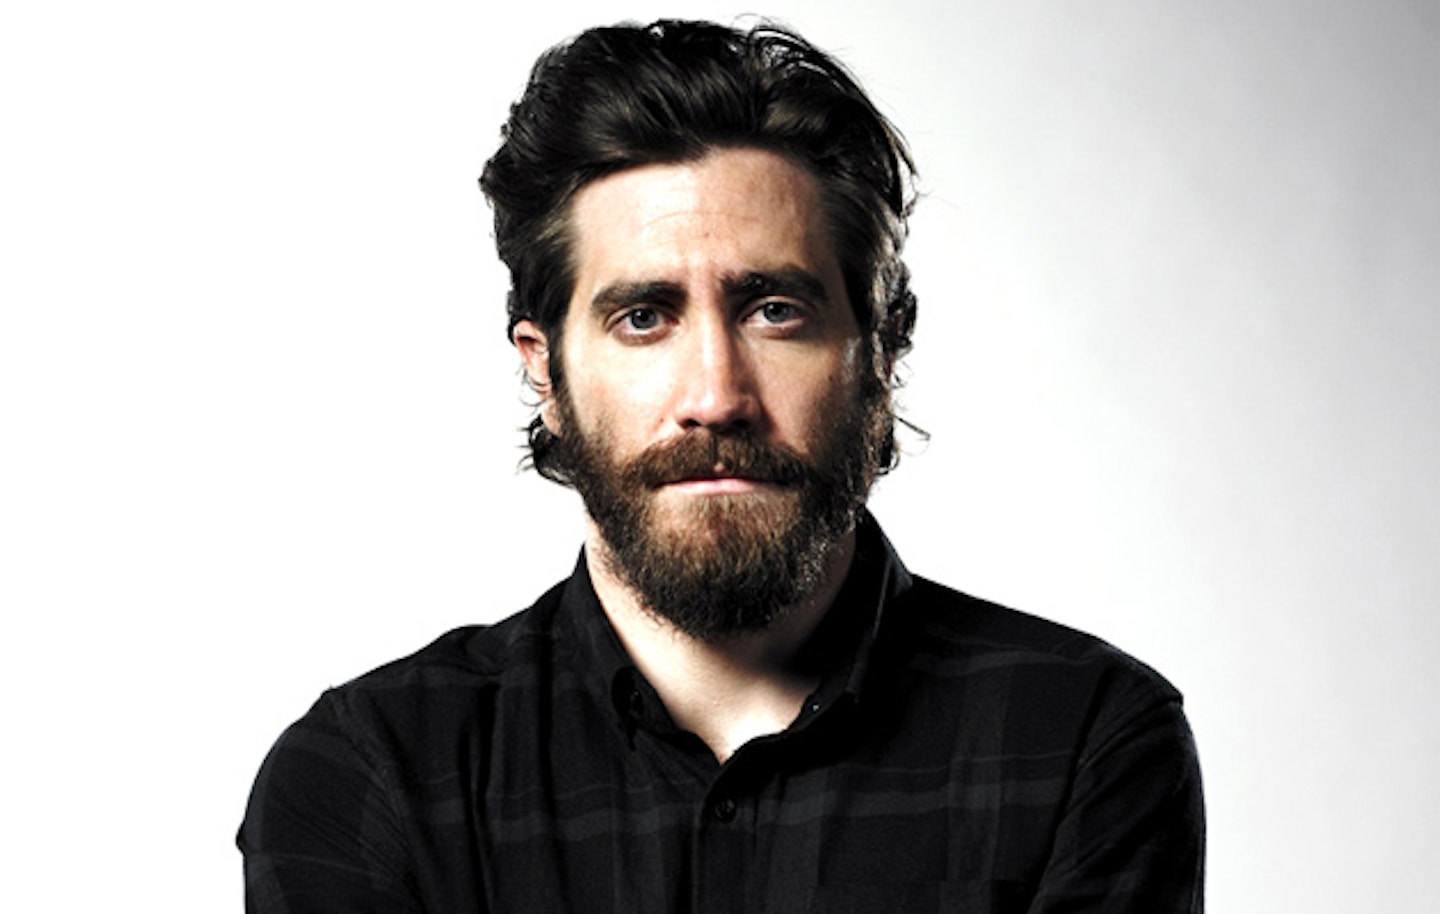 Jake-gyllenhaal-interested-in-demolition